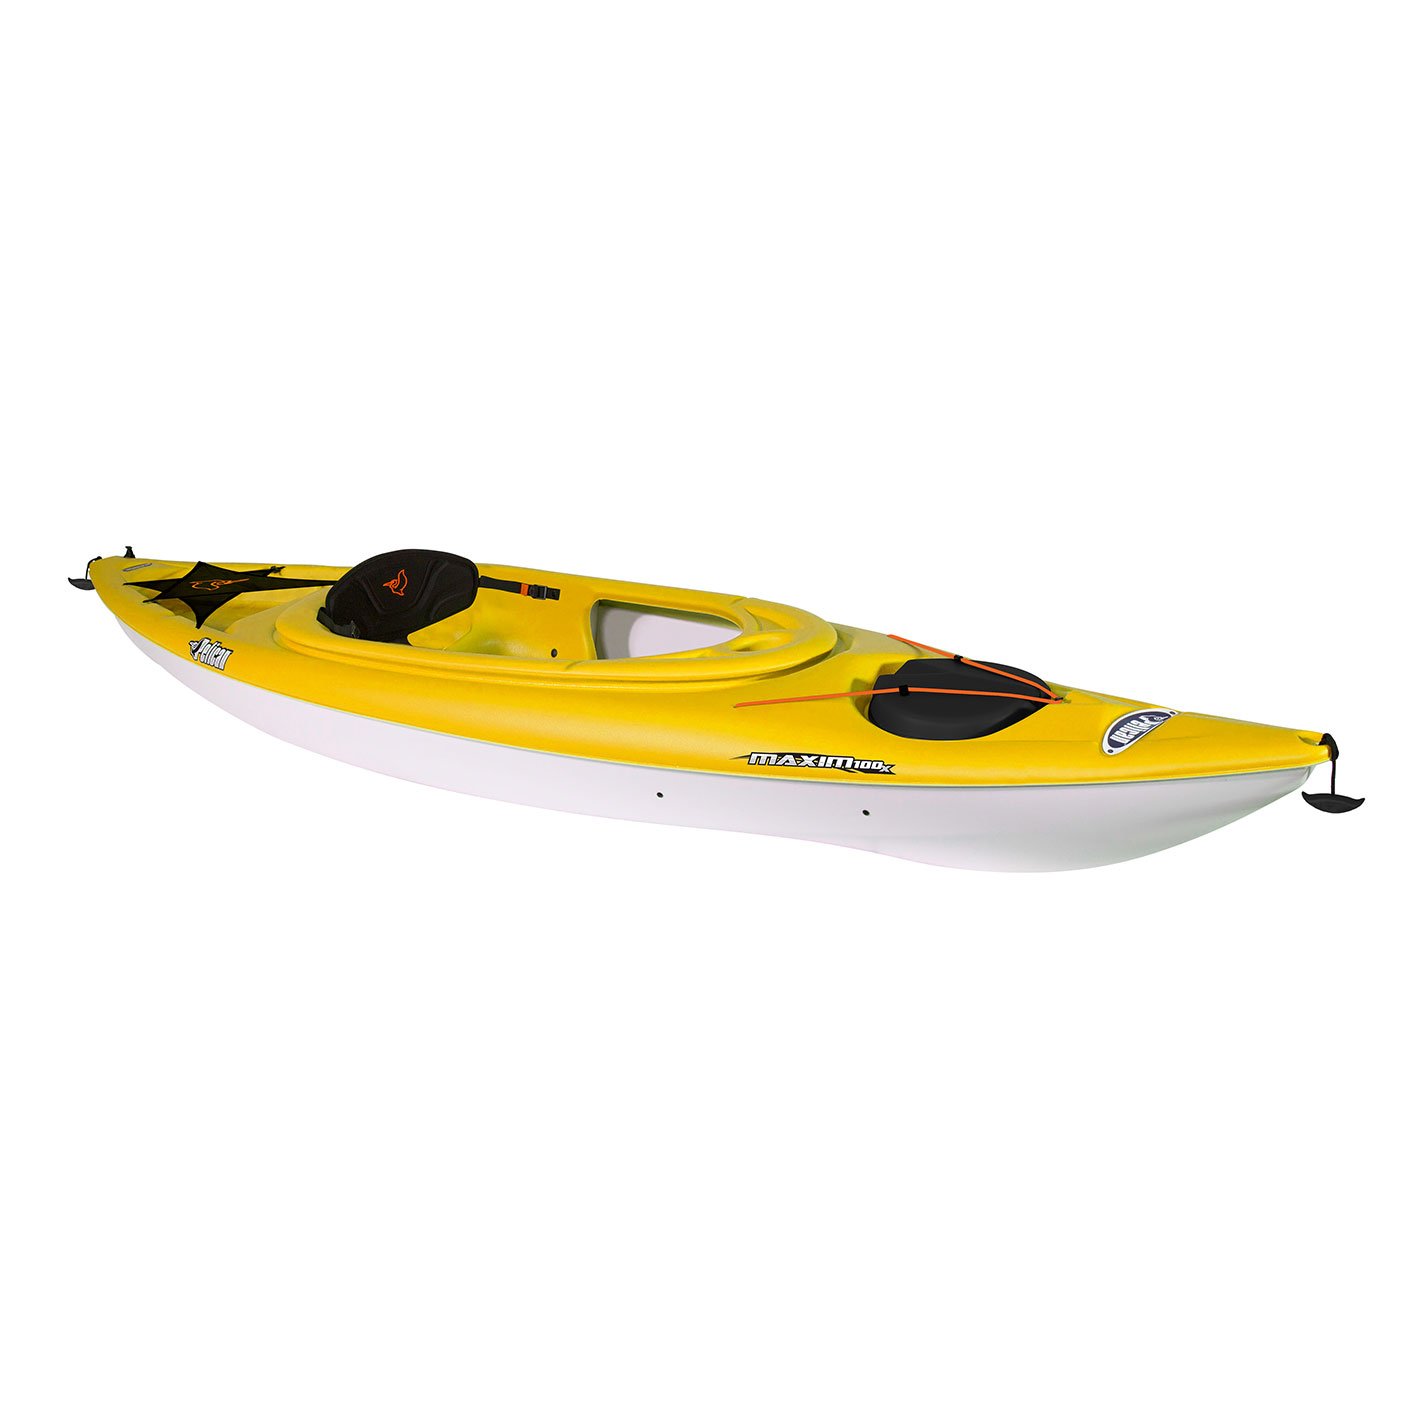 Pelican - Maxim 100X - Recreational Sit-In Kayak - 10 ft - Yellow - image 1 of 6